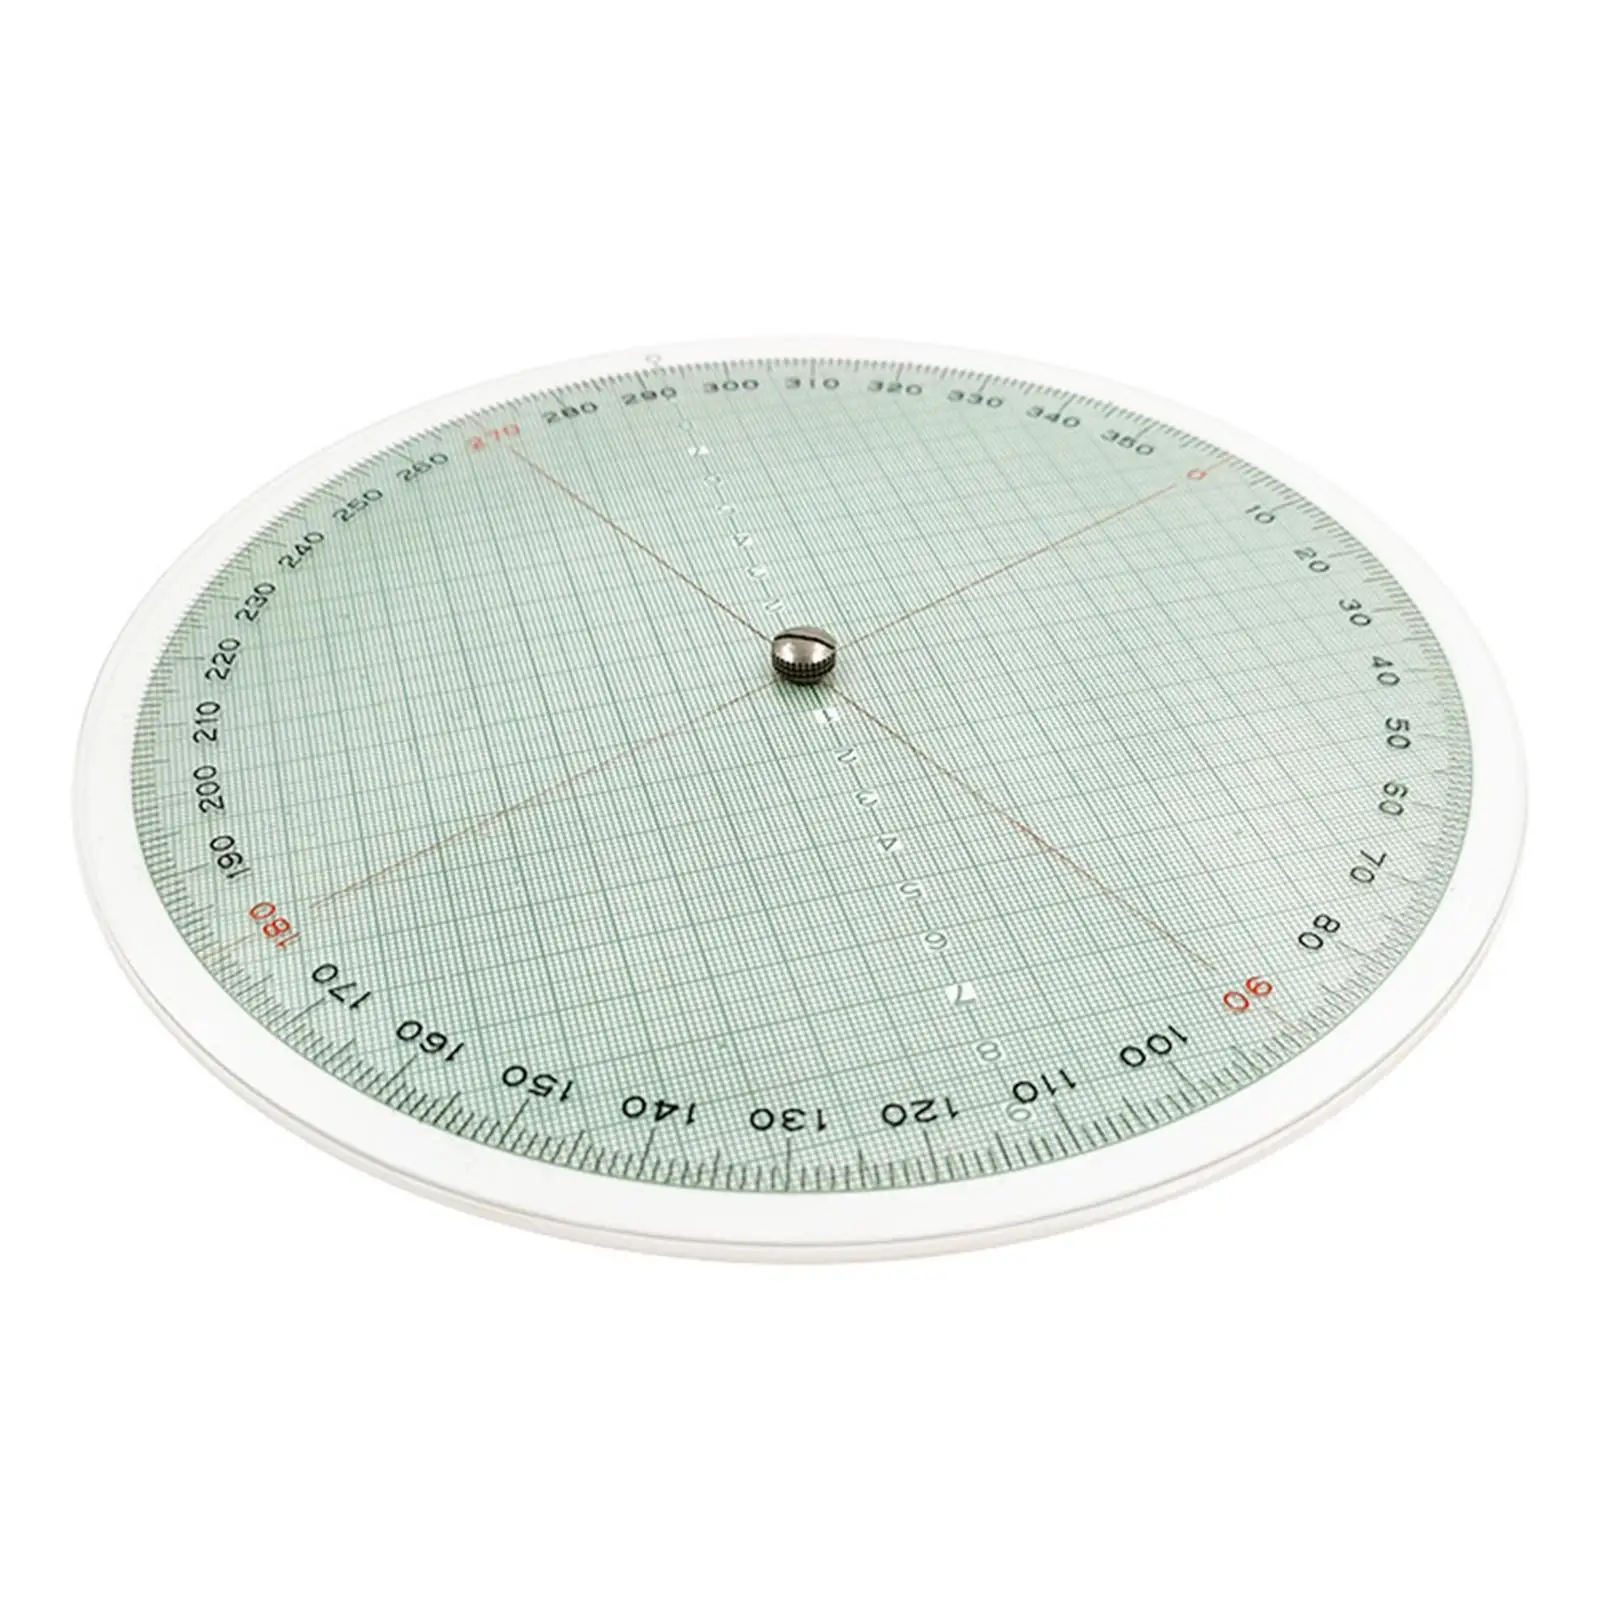 Nautical Slide Rule Portable Sturdy Easy Using Fittings Durable Plotting Measuring Scale Sailing Circular Ruler Navigation Tool